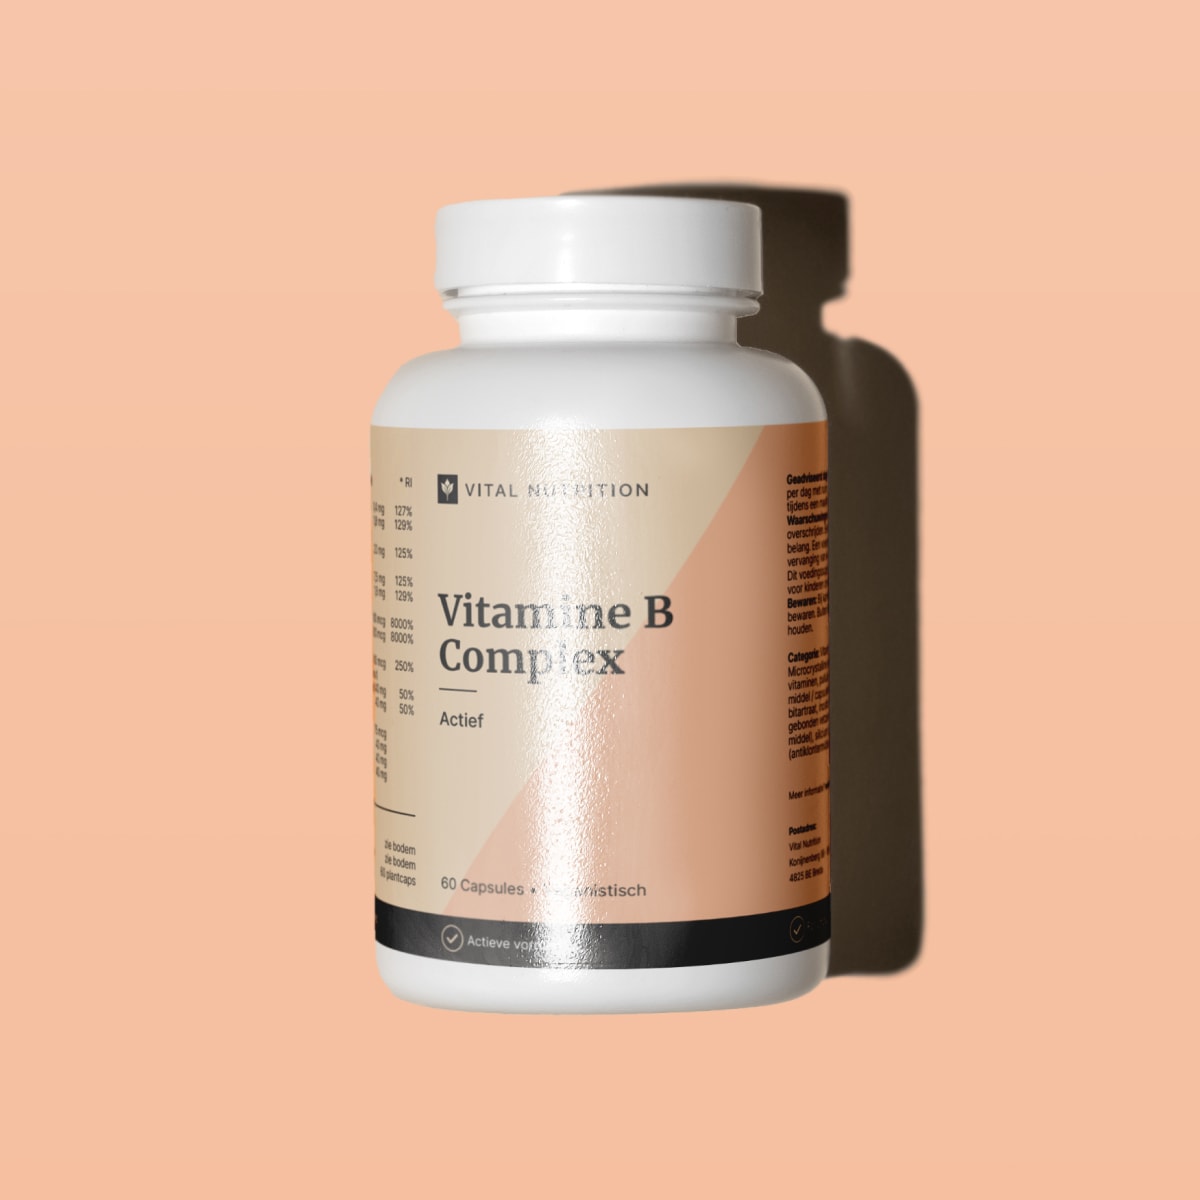 Vitamine B Complex Actief van Vital Nutrition